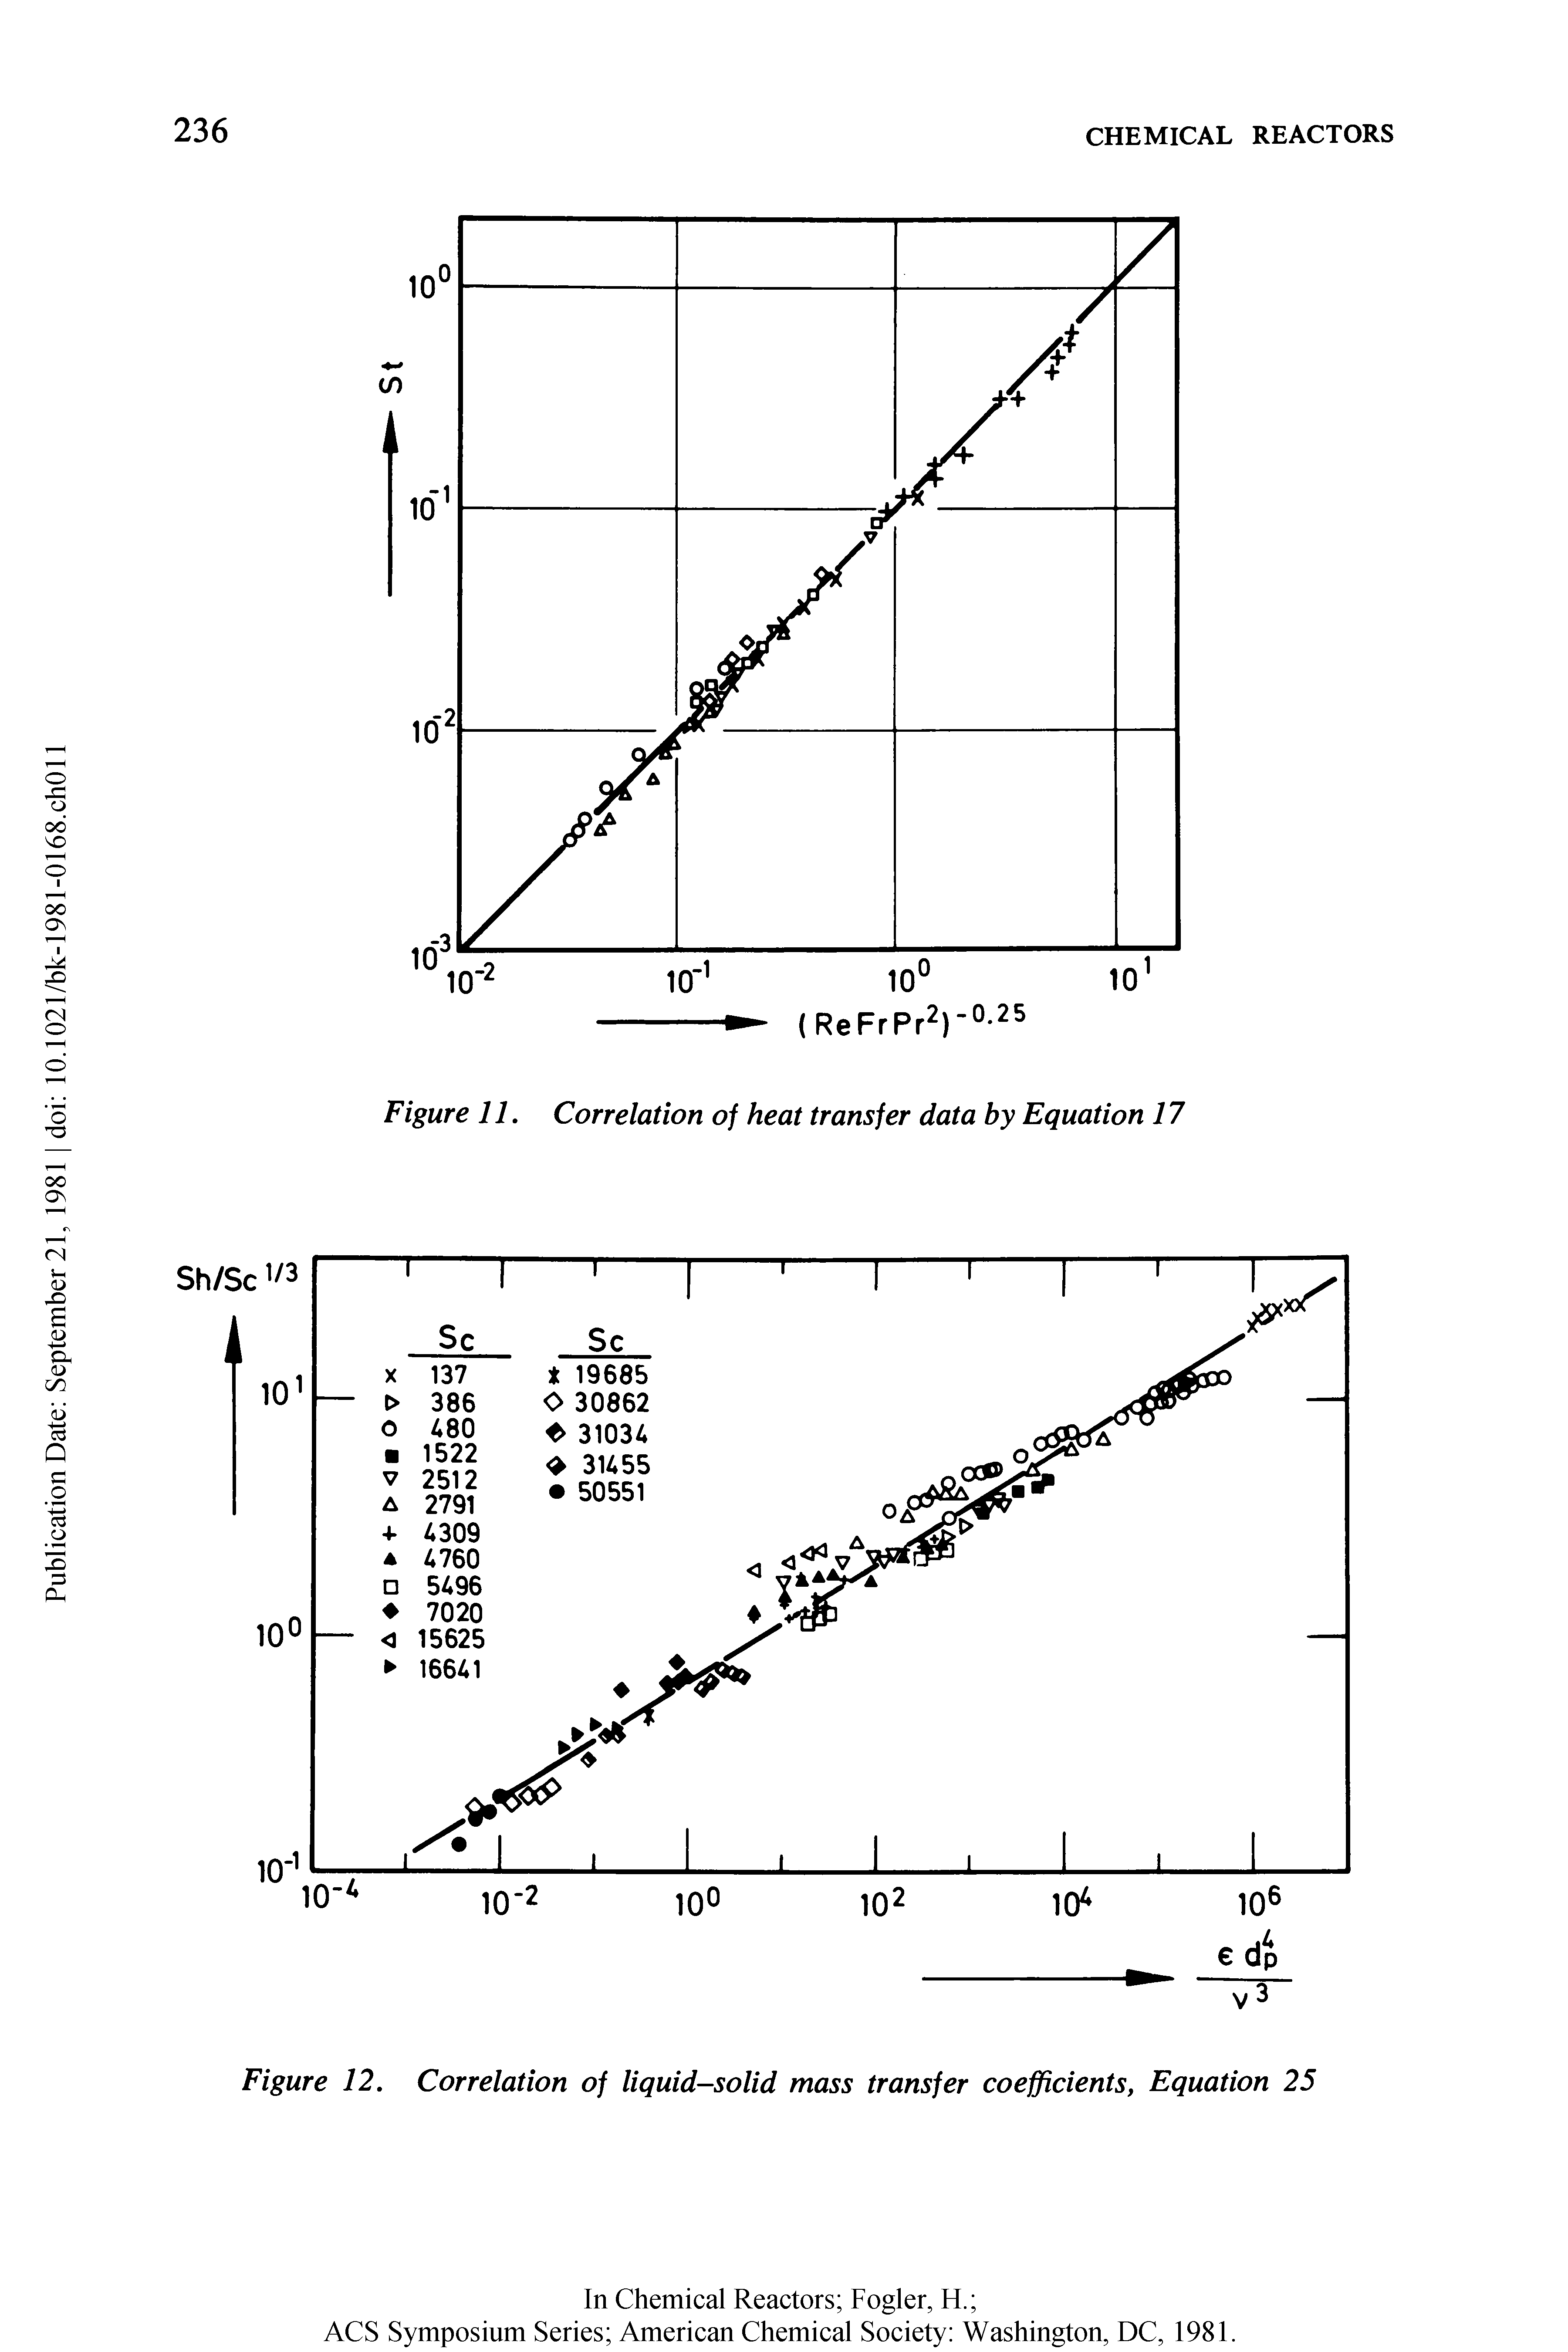 Figure 12. Correlation of liquid-solid mass transfer coefficients, Equation 25...